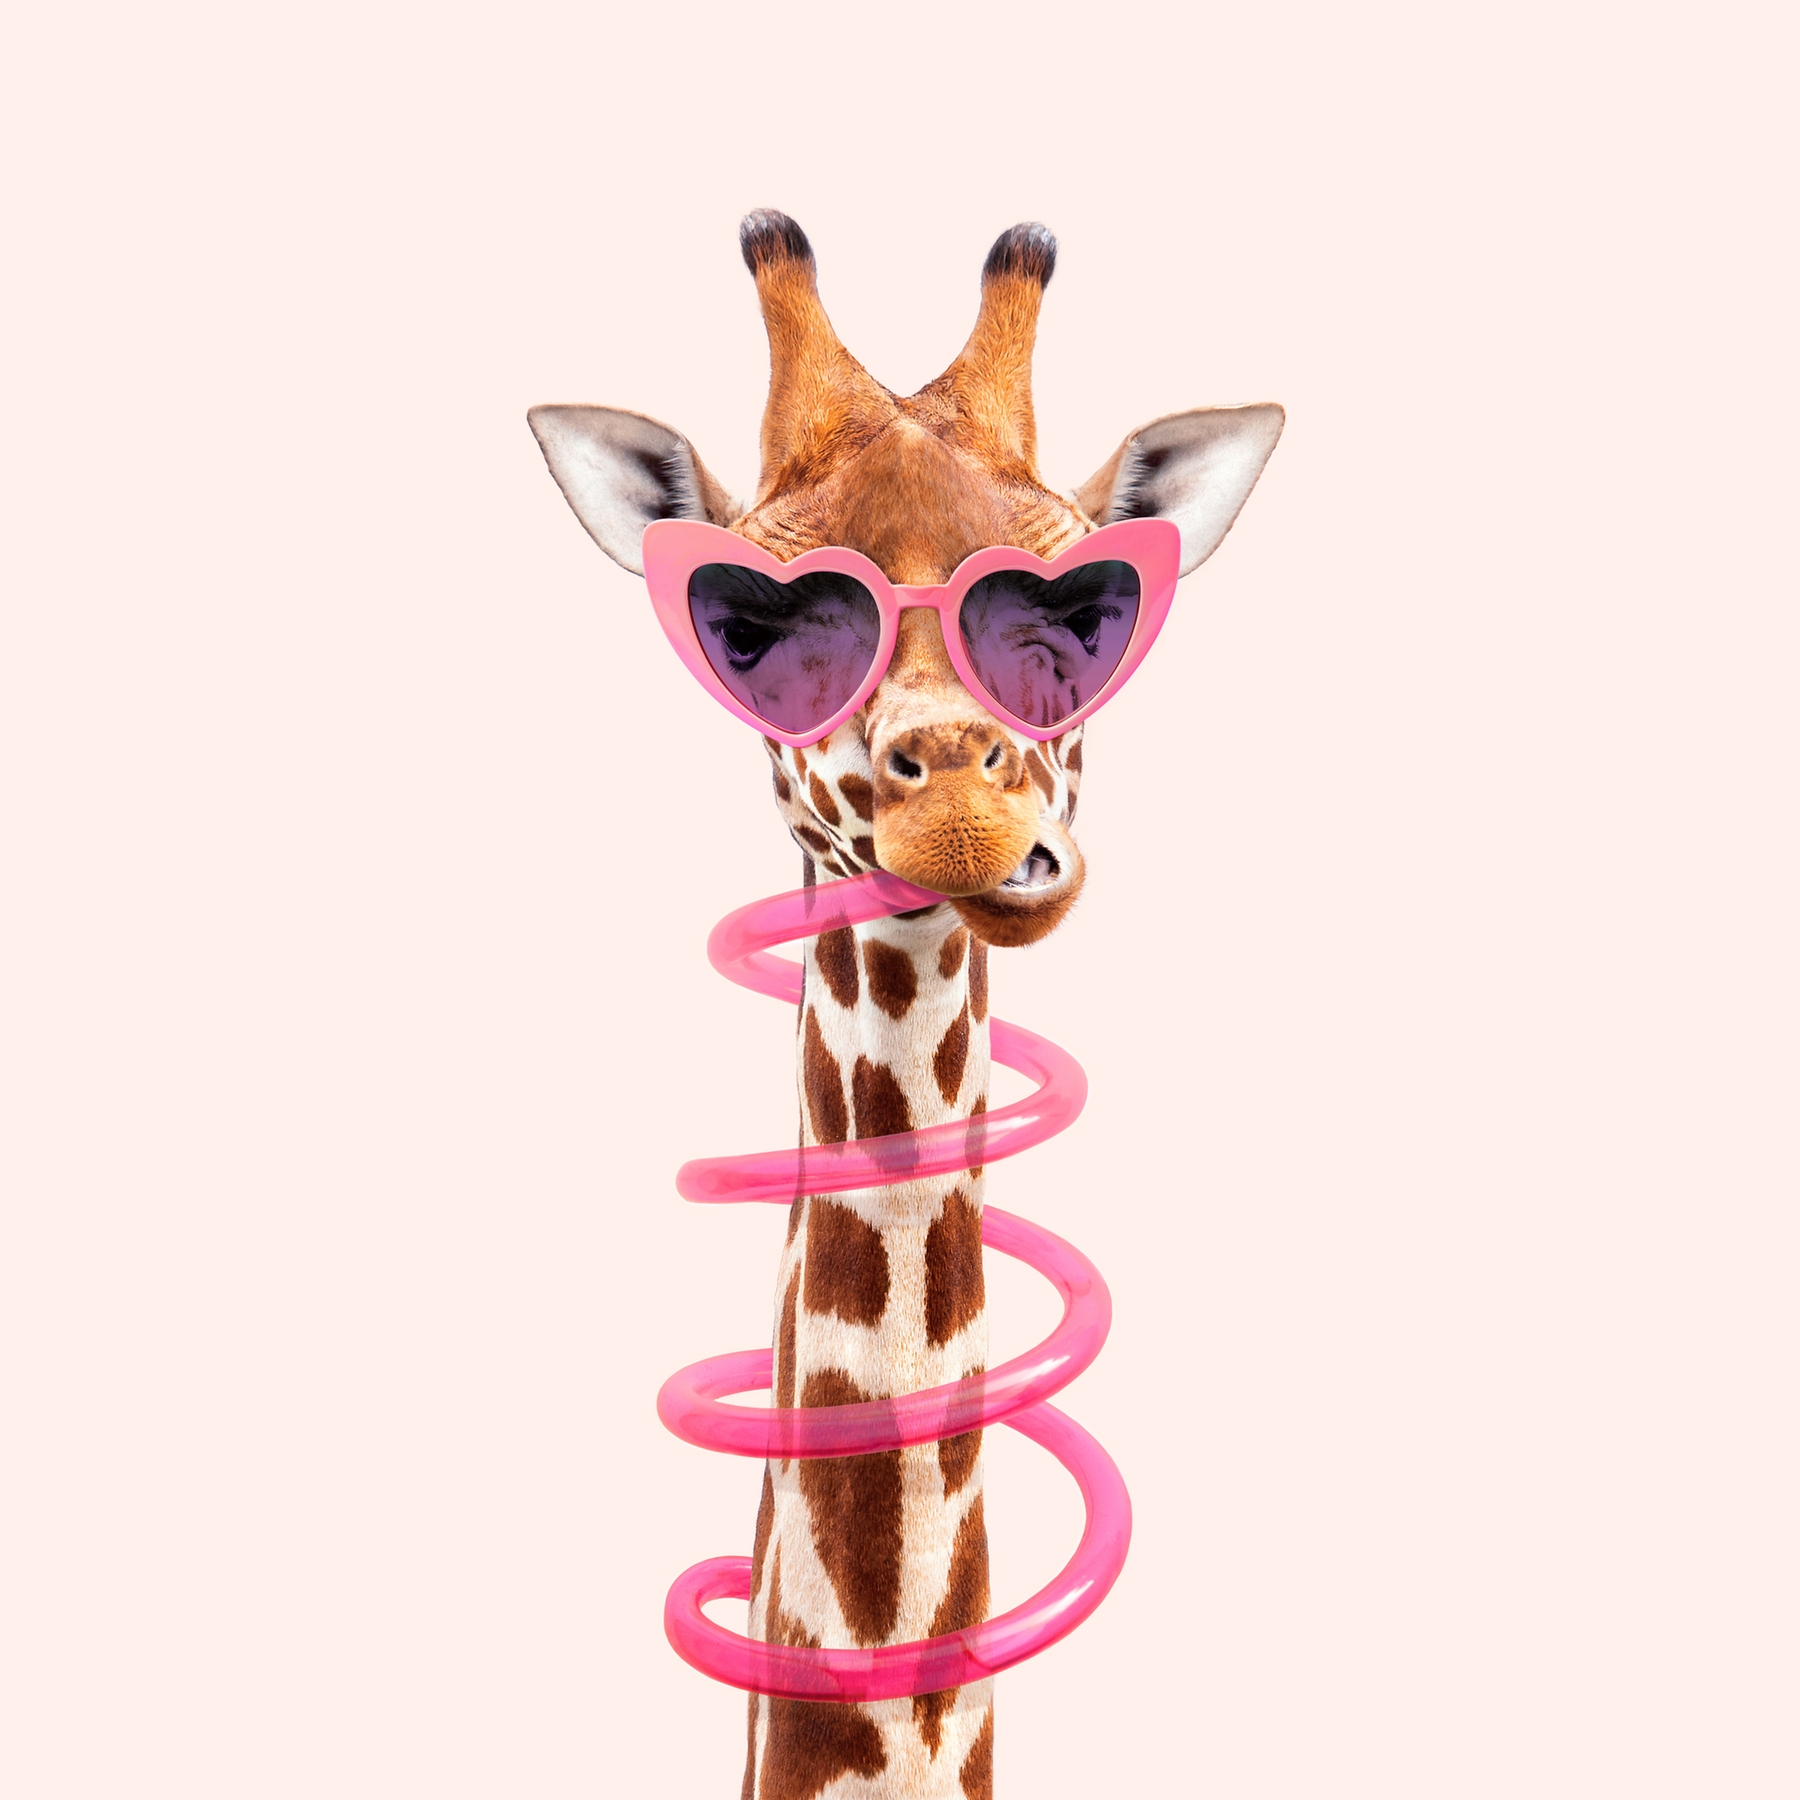 giraffe background  Giraffe pictures Animal wallpaper Cute animal photos